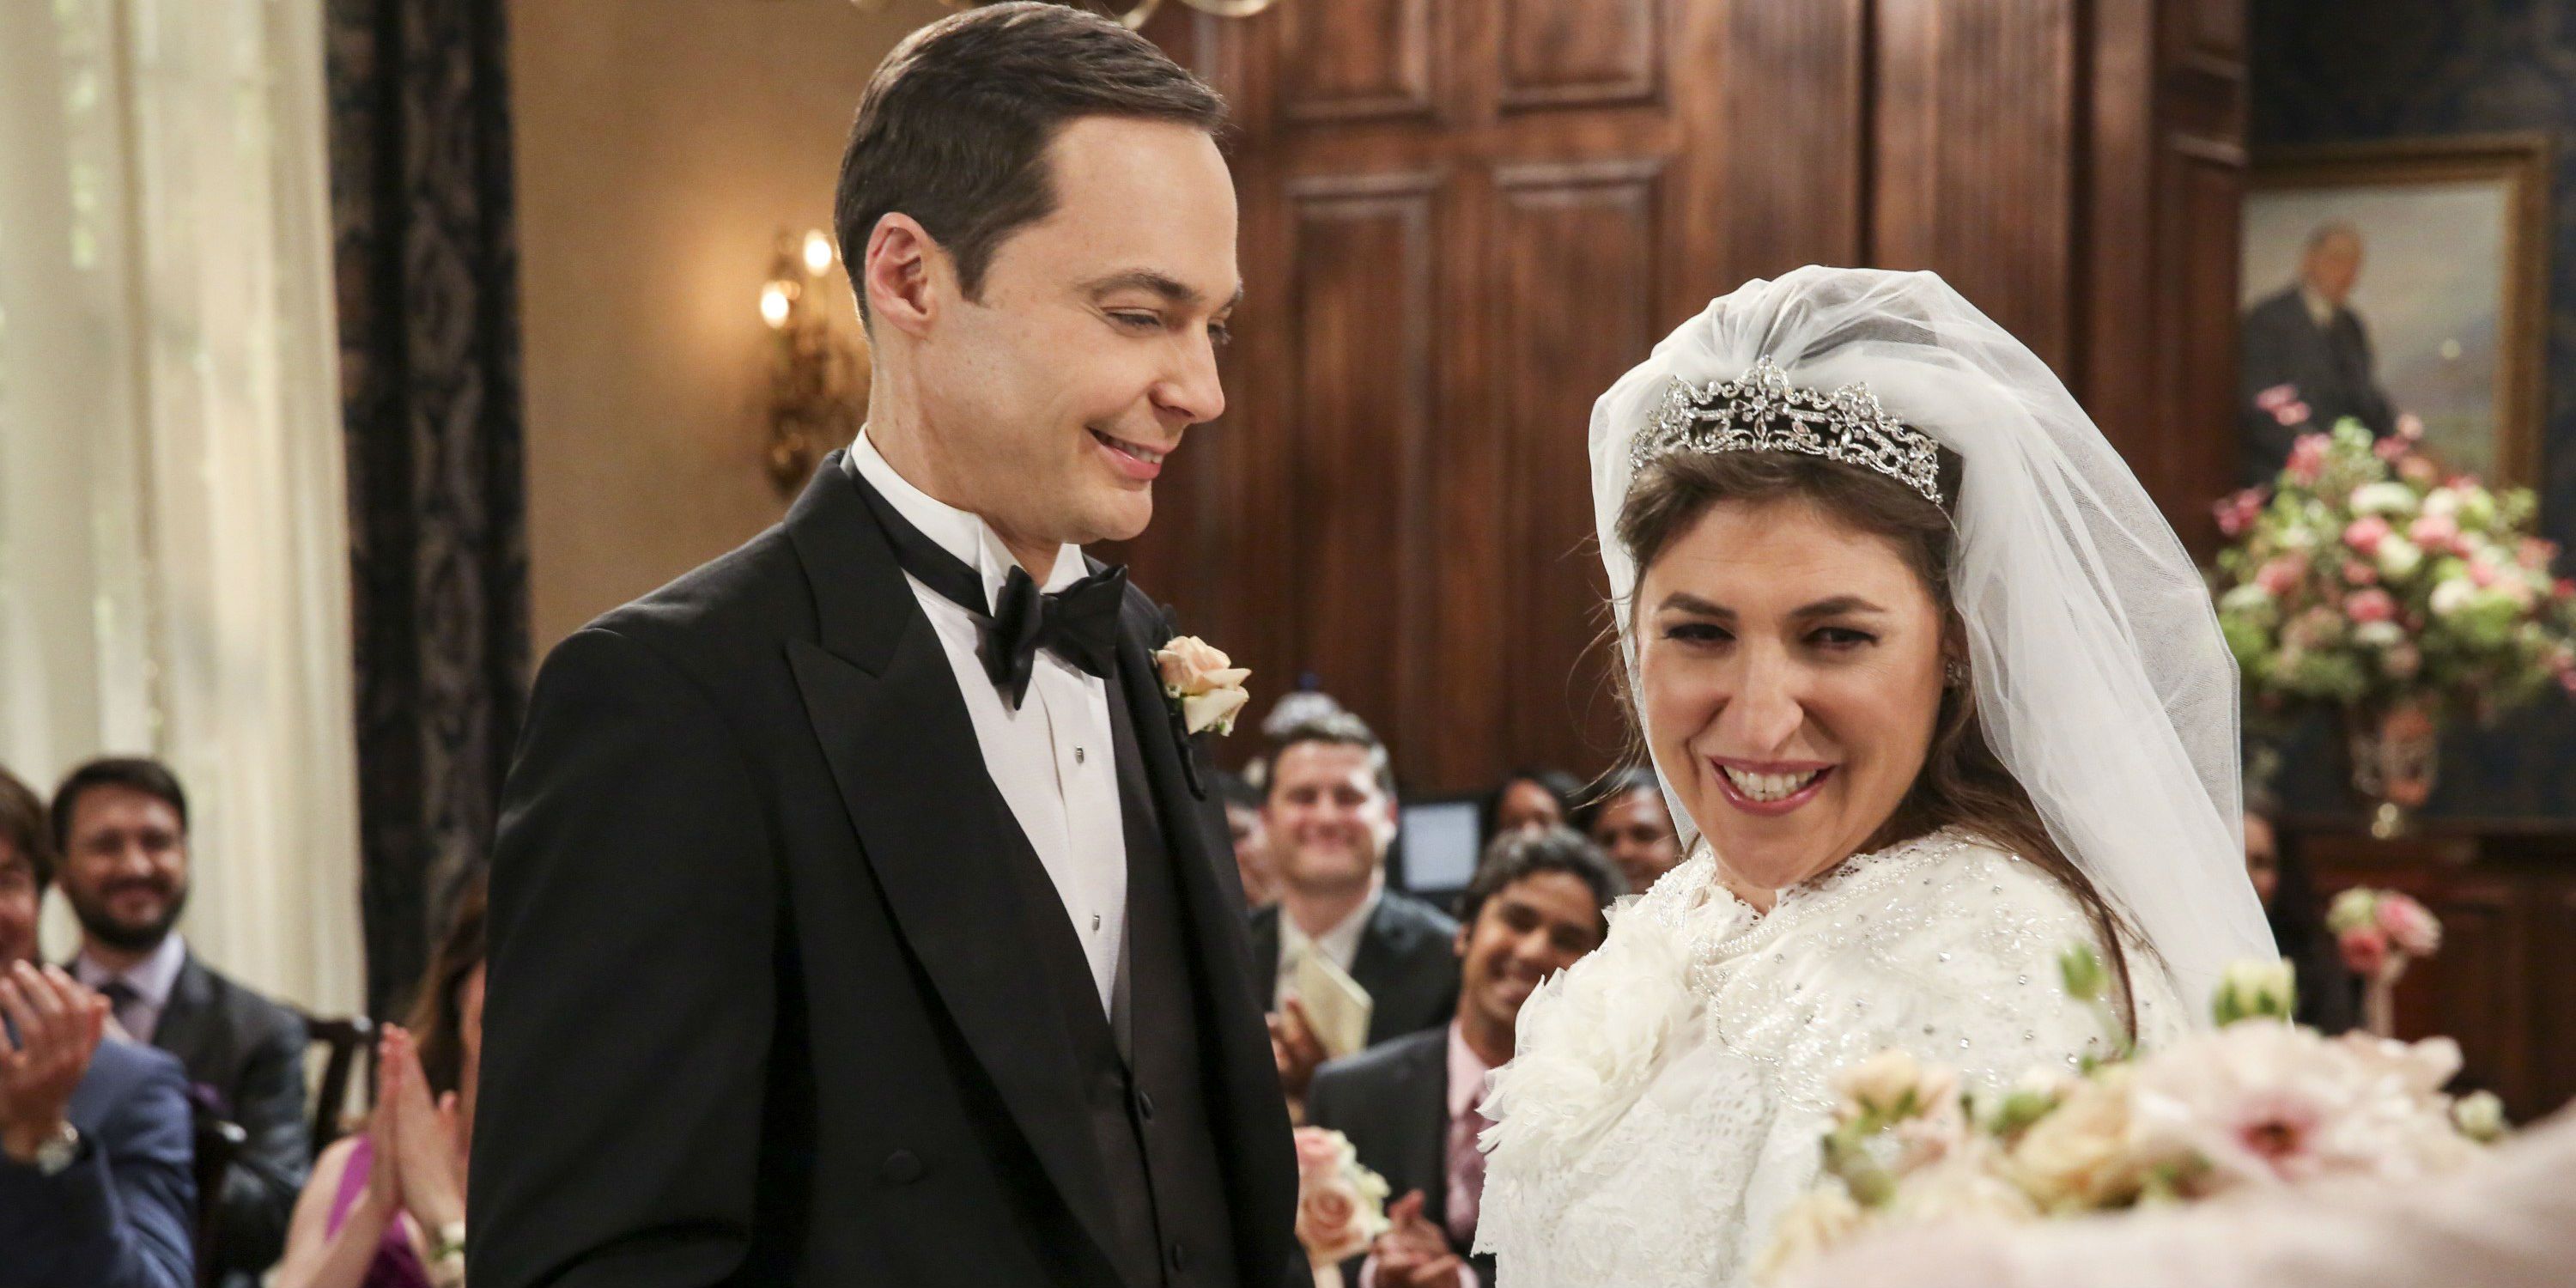 Sheldon and Amy in The Big Bang Theory season 11 finale wedding